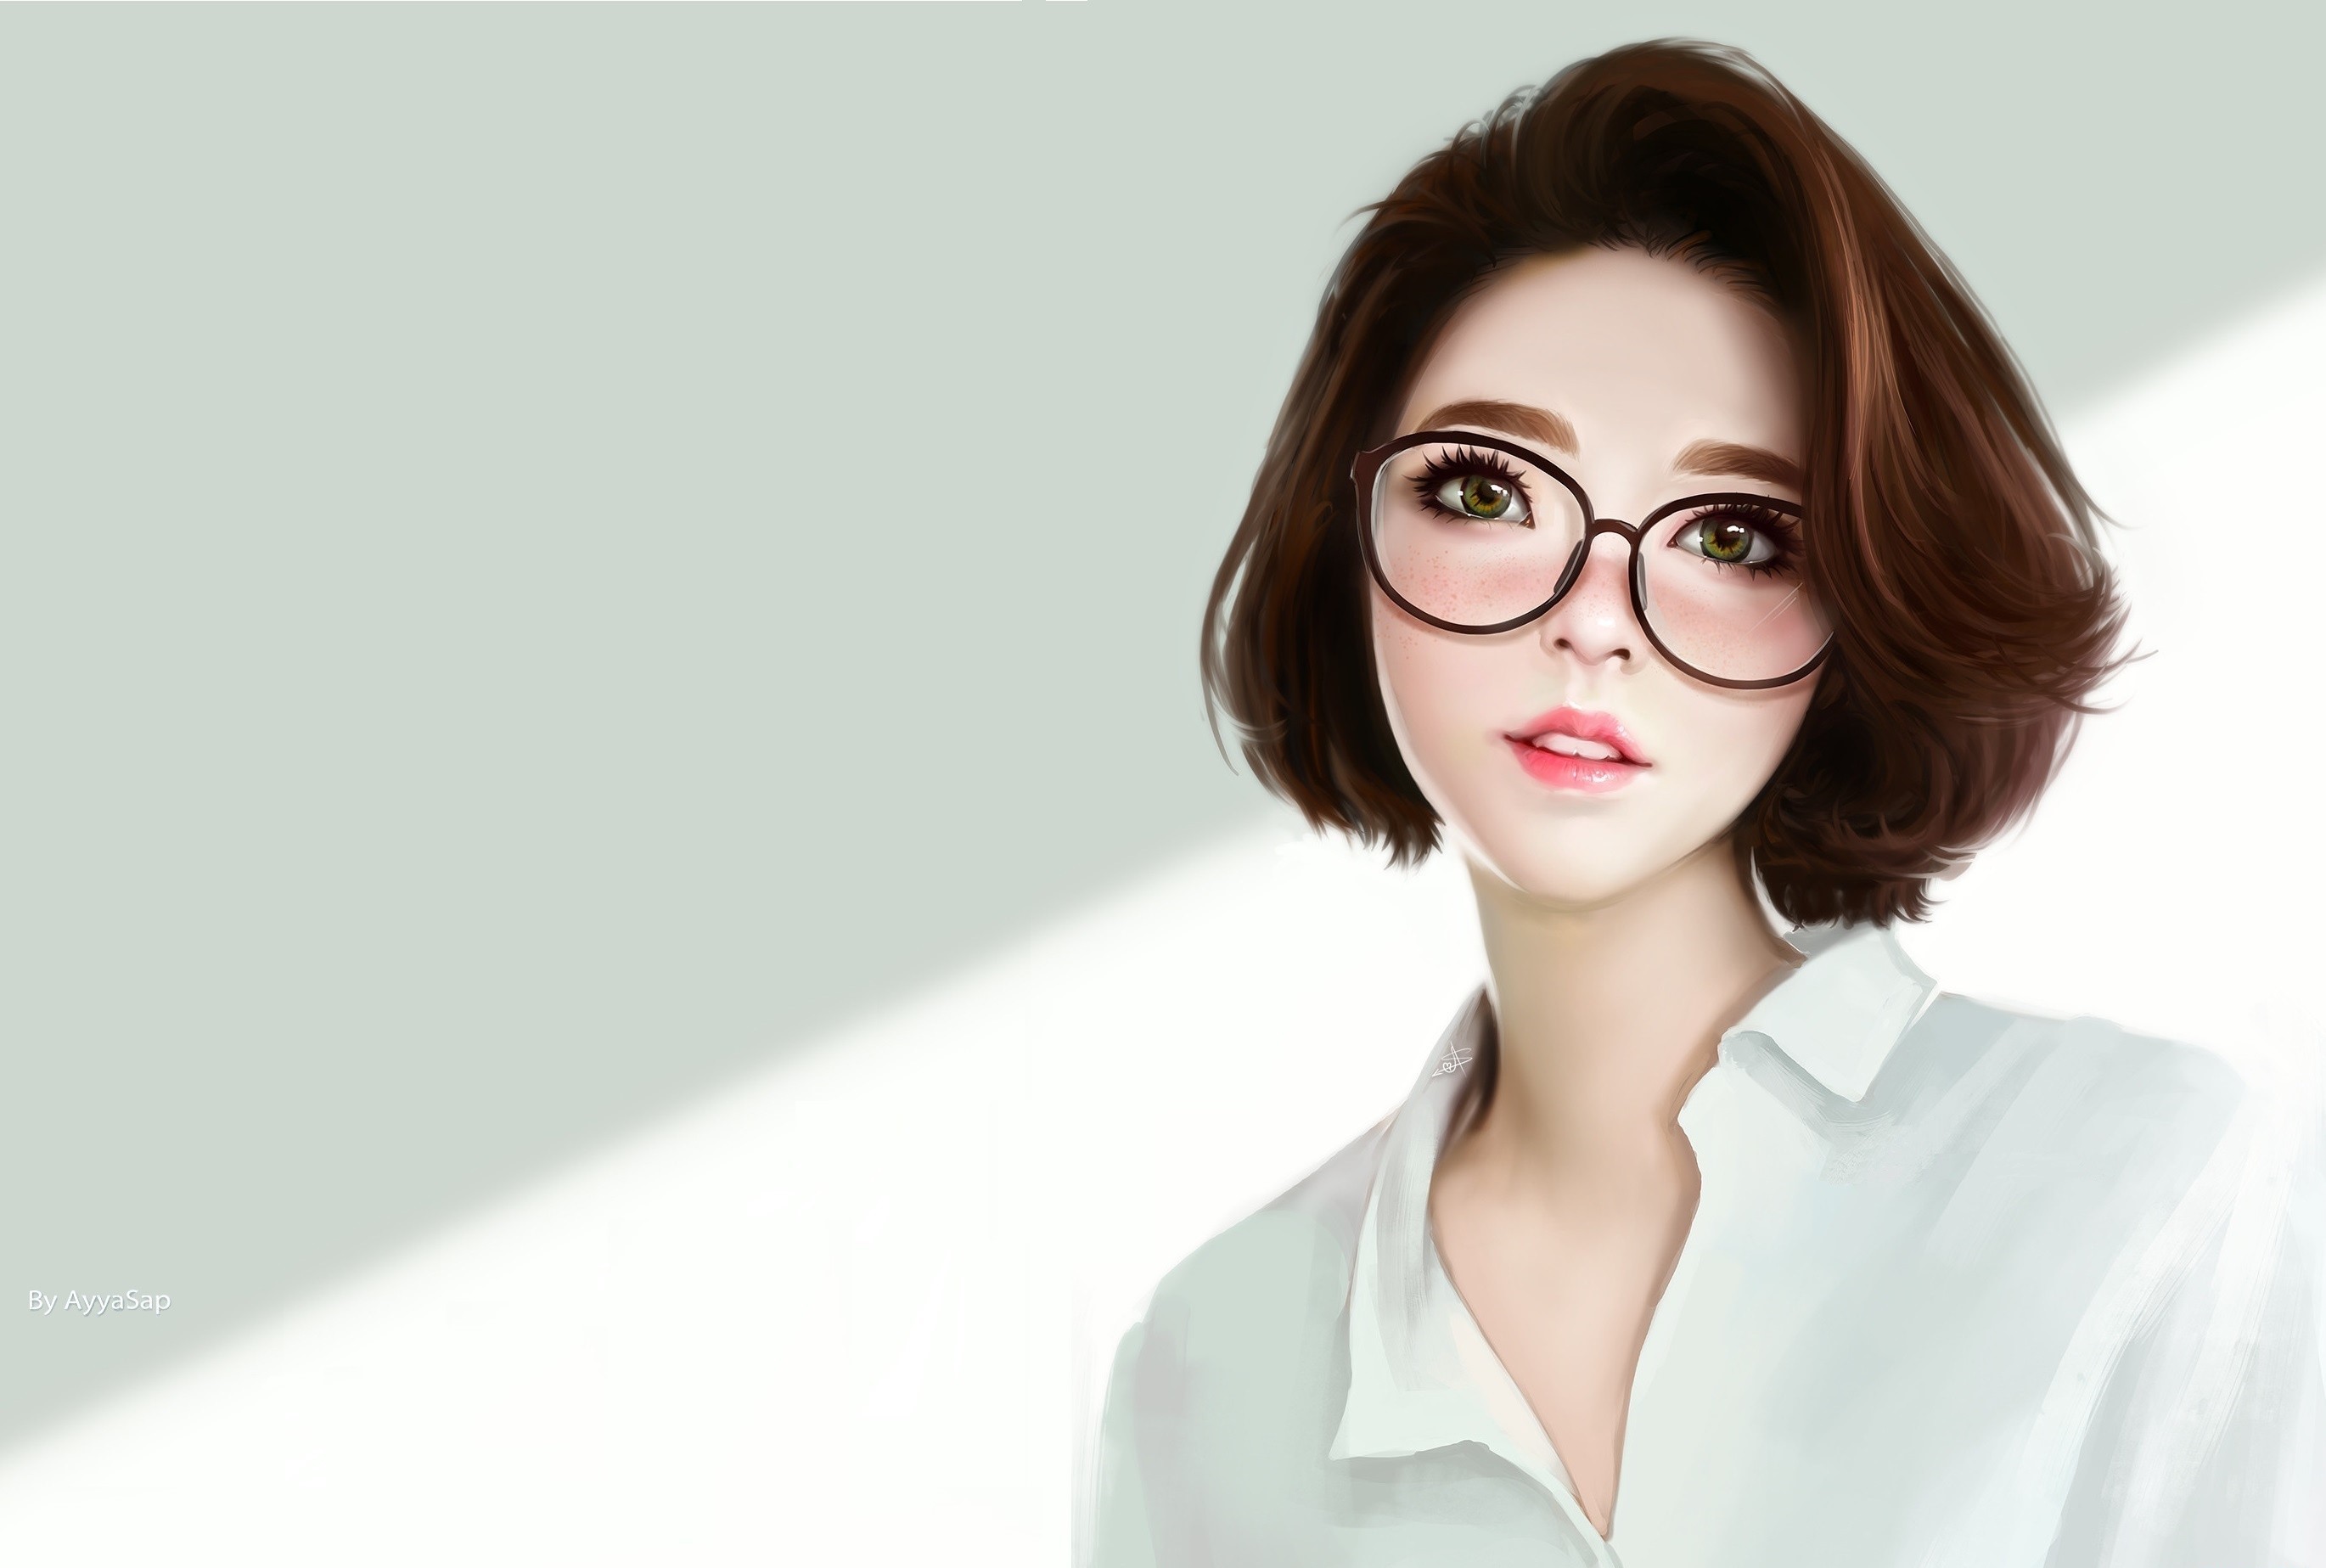 Cute Woman Women With Glasses Artwork, HD Fantasy Girls, 4k ...